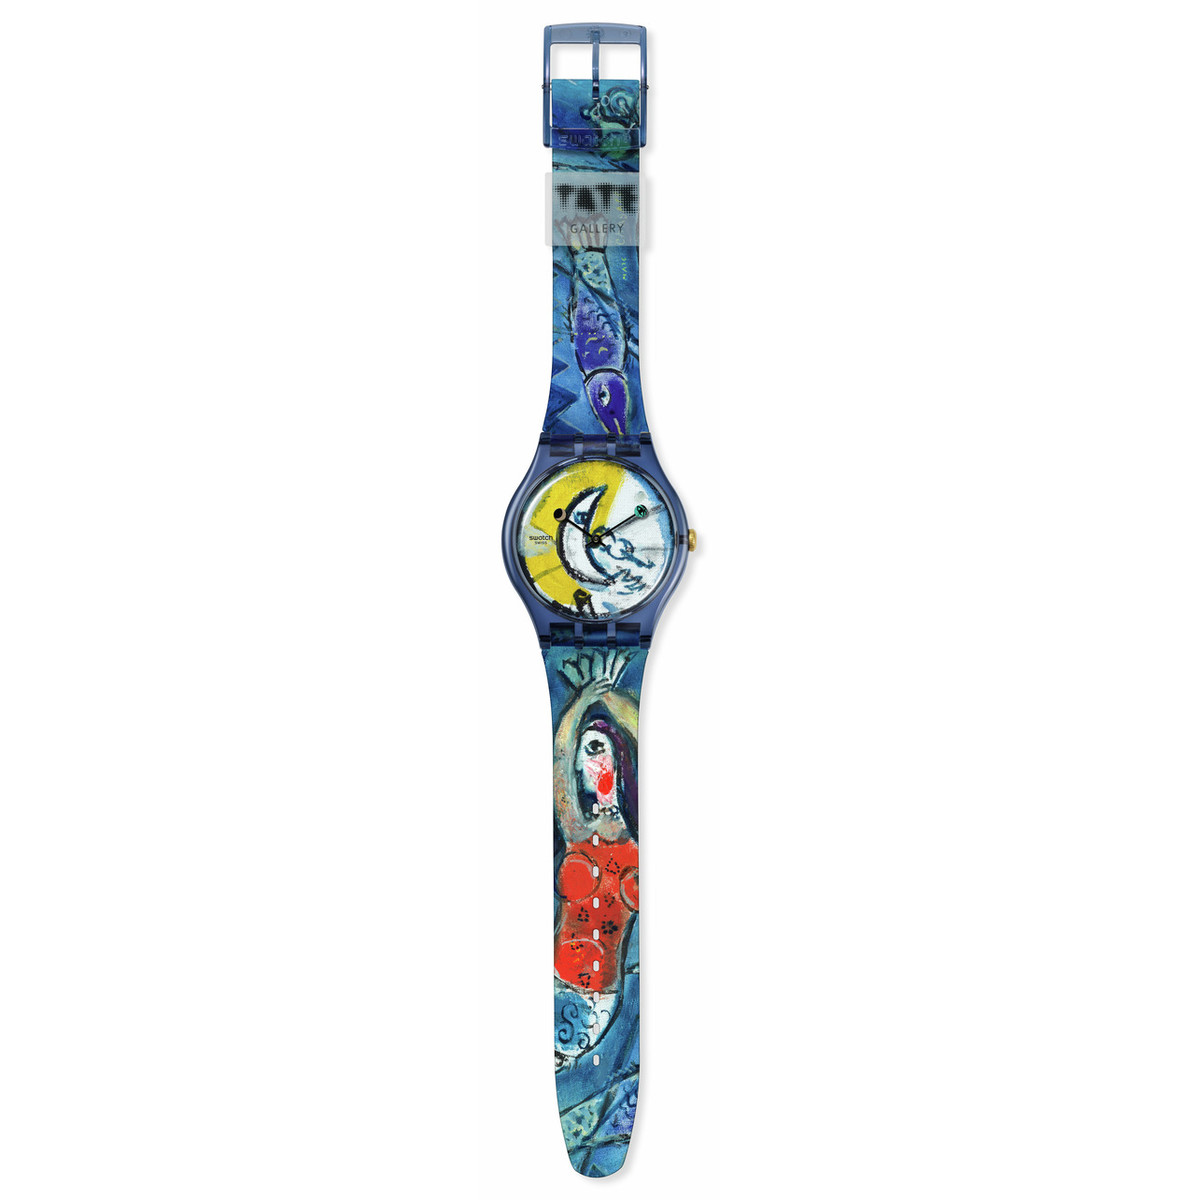 Montre SWATCH New gent bioceramic Chagall's blue circus homme bracelet silicone bleu - vue D1